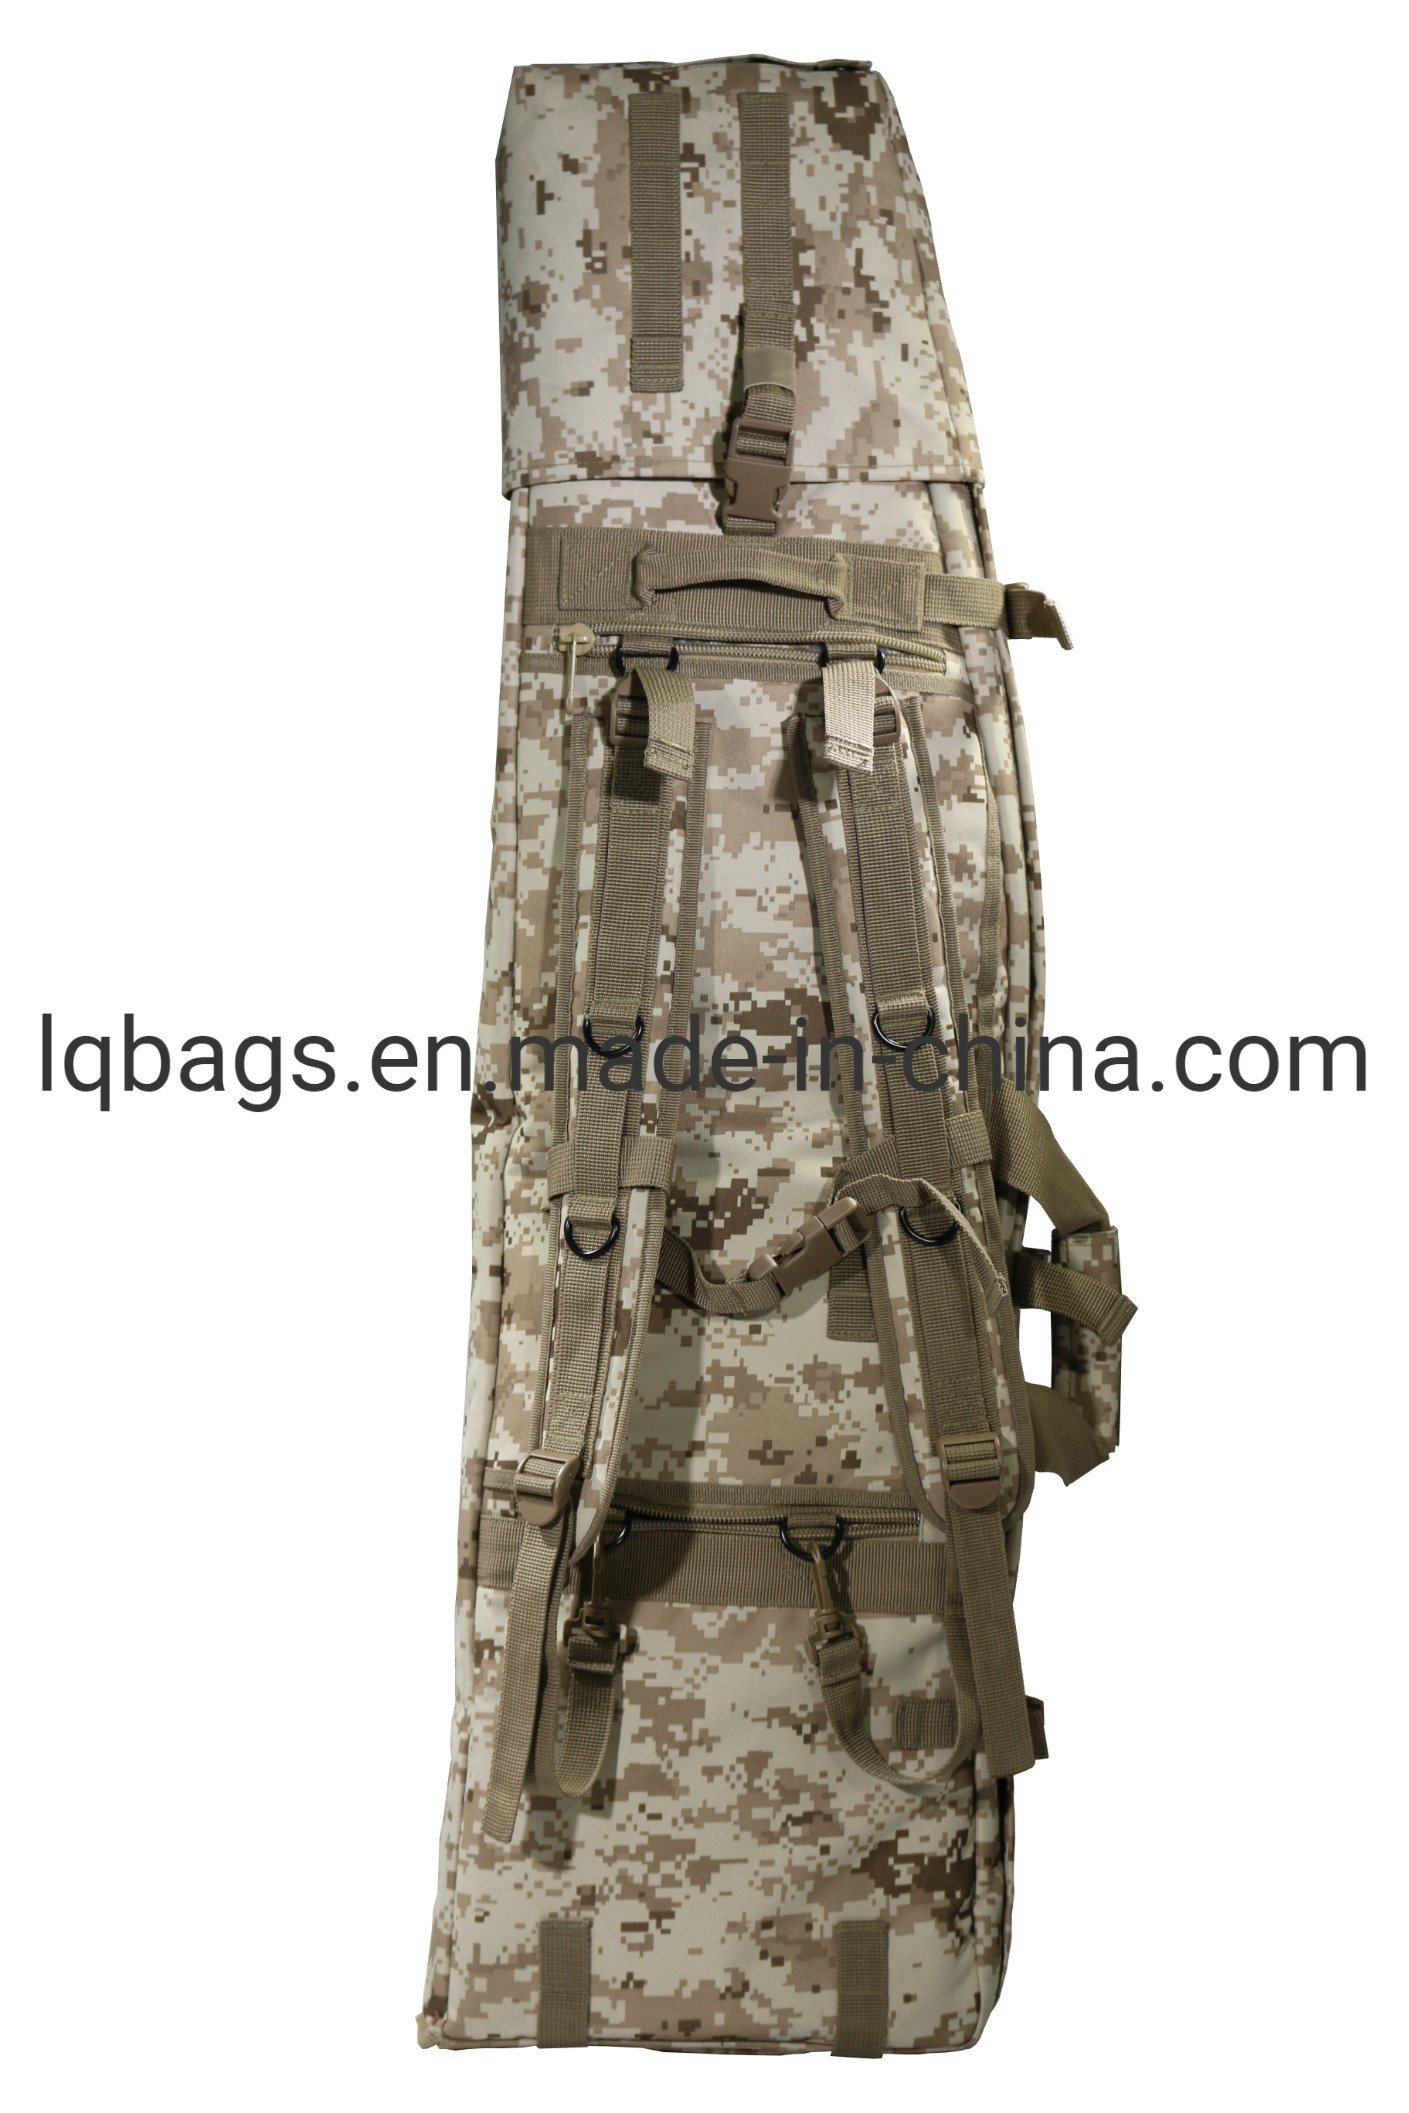 Military Tactical Long Gun Backpack Rifle Bag Backpack for Hunting